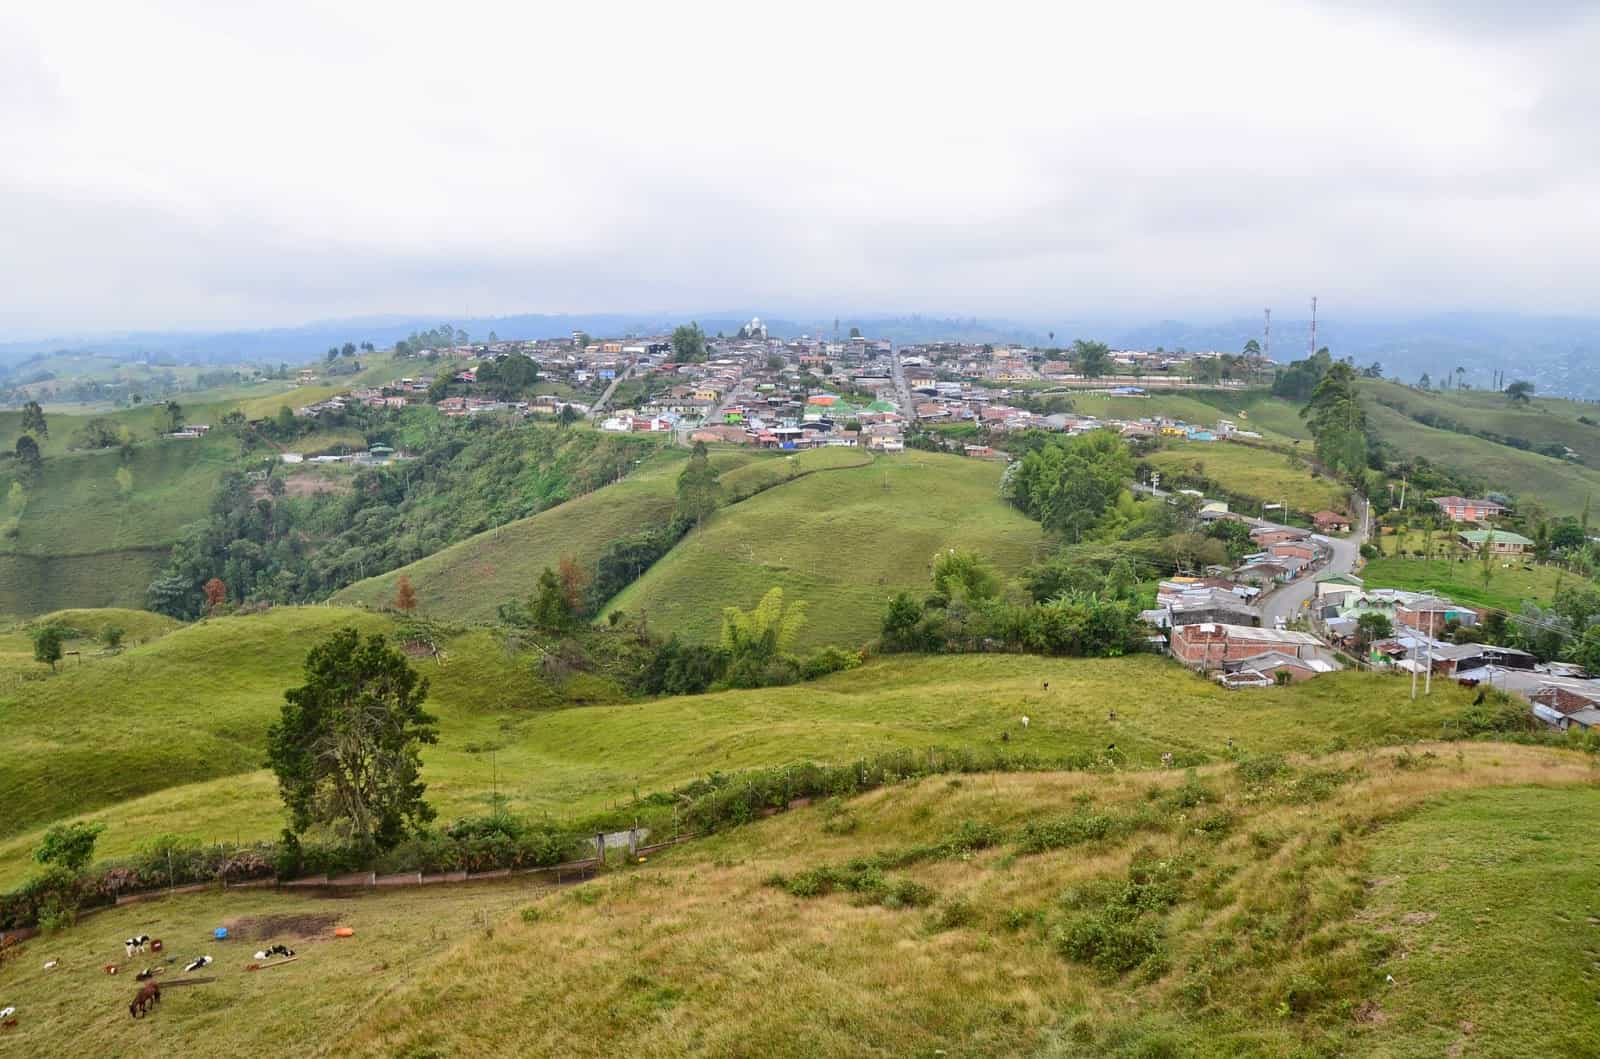 View of Filandia from Mirador Colina Iluminada in Filandia, Quindío, Colombia